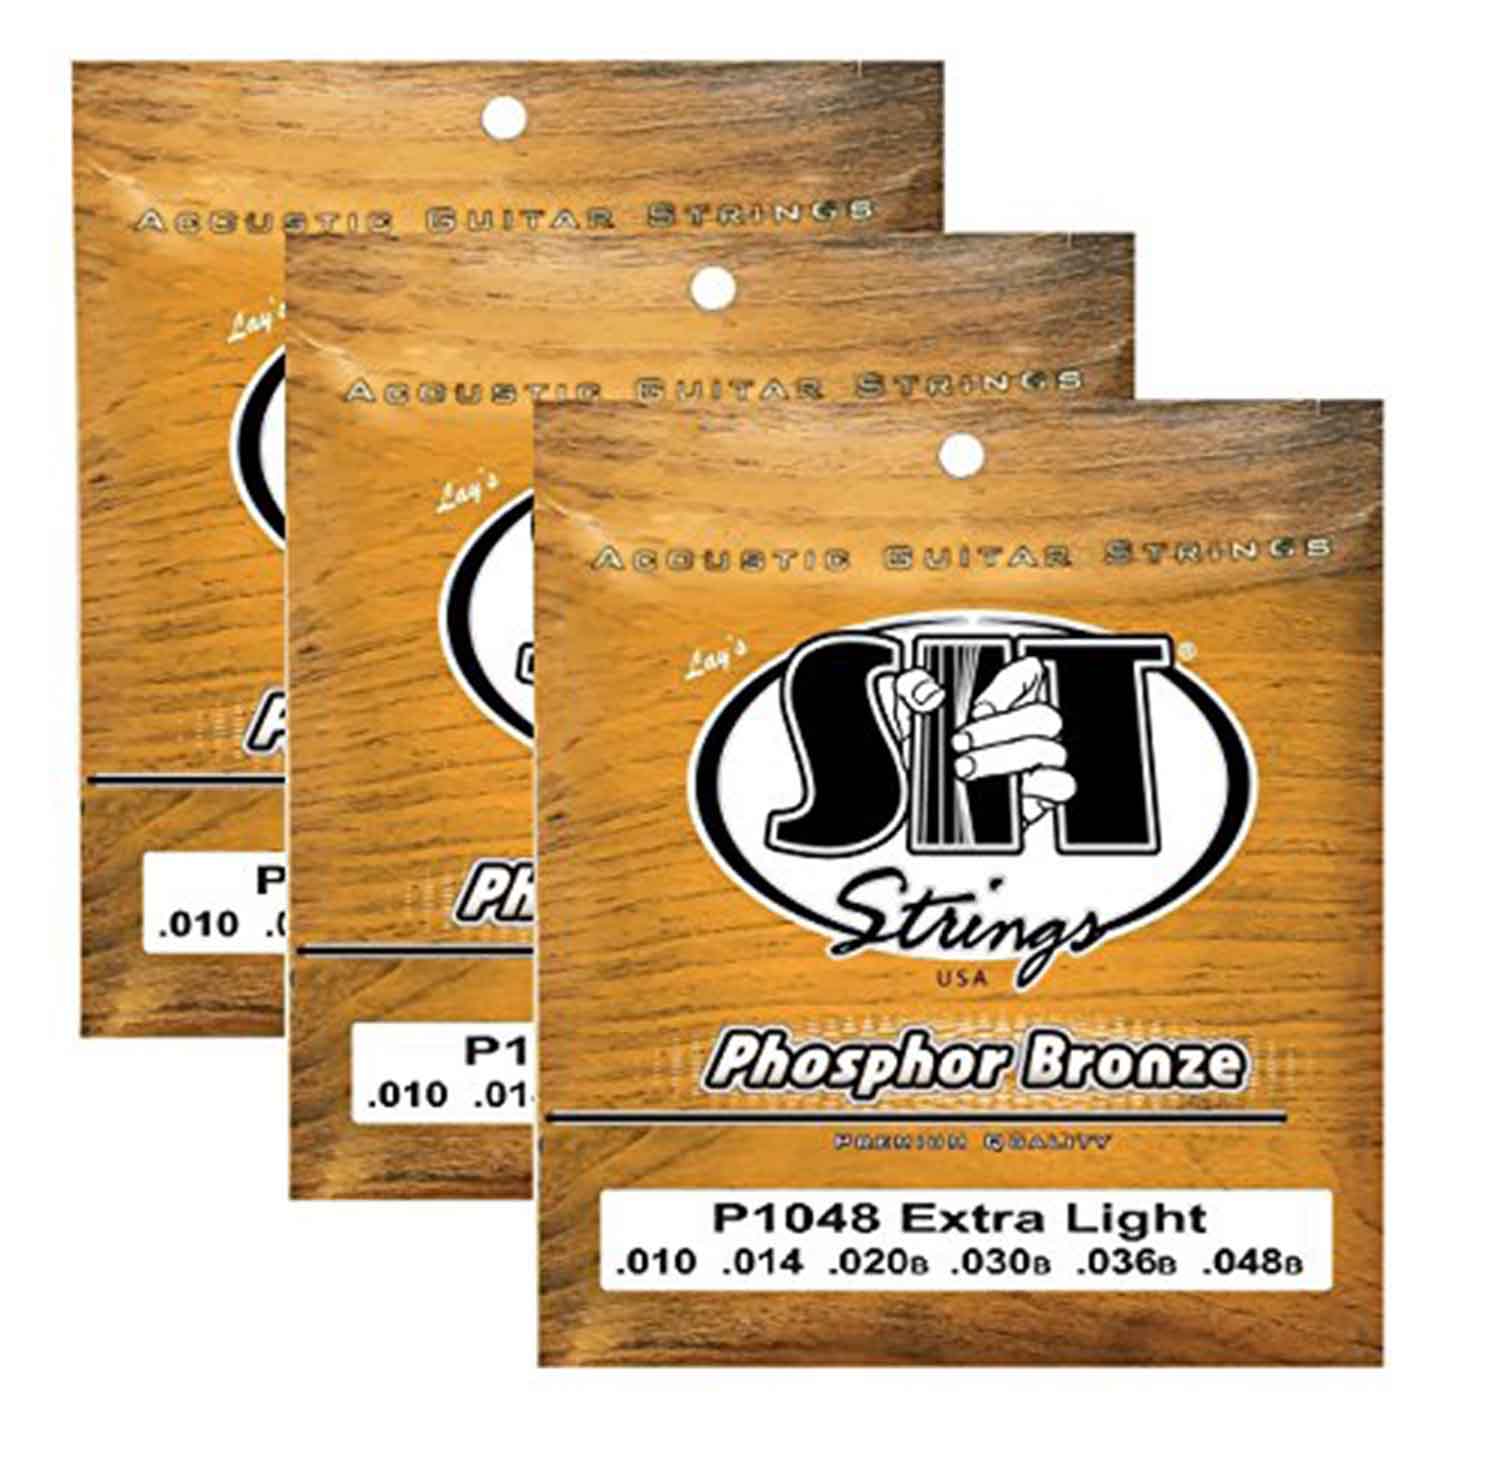 SIT Strings P1048 Extra Light Phosphor Bronze Acoustic Guitar Strings - 3 Pack - Hollywood DJ